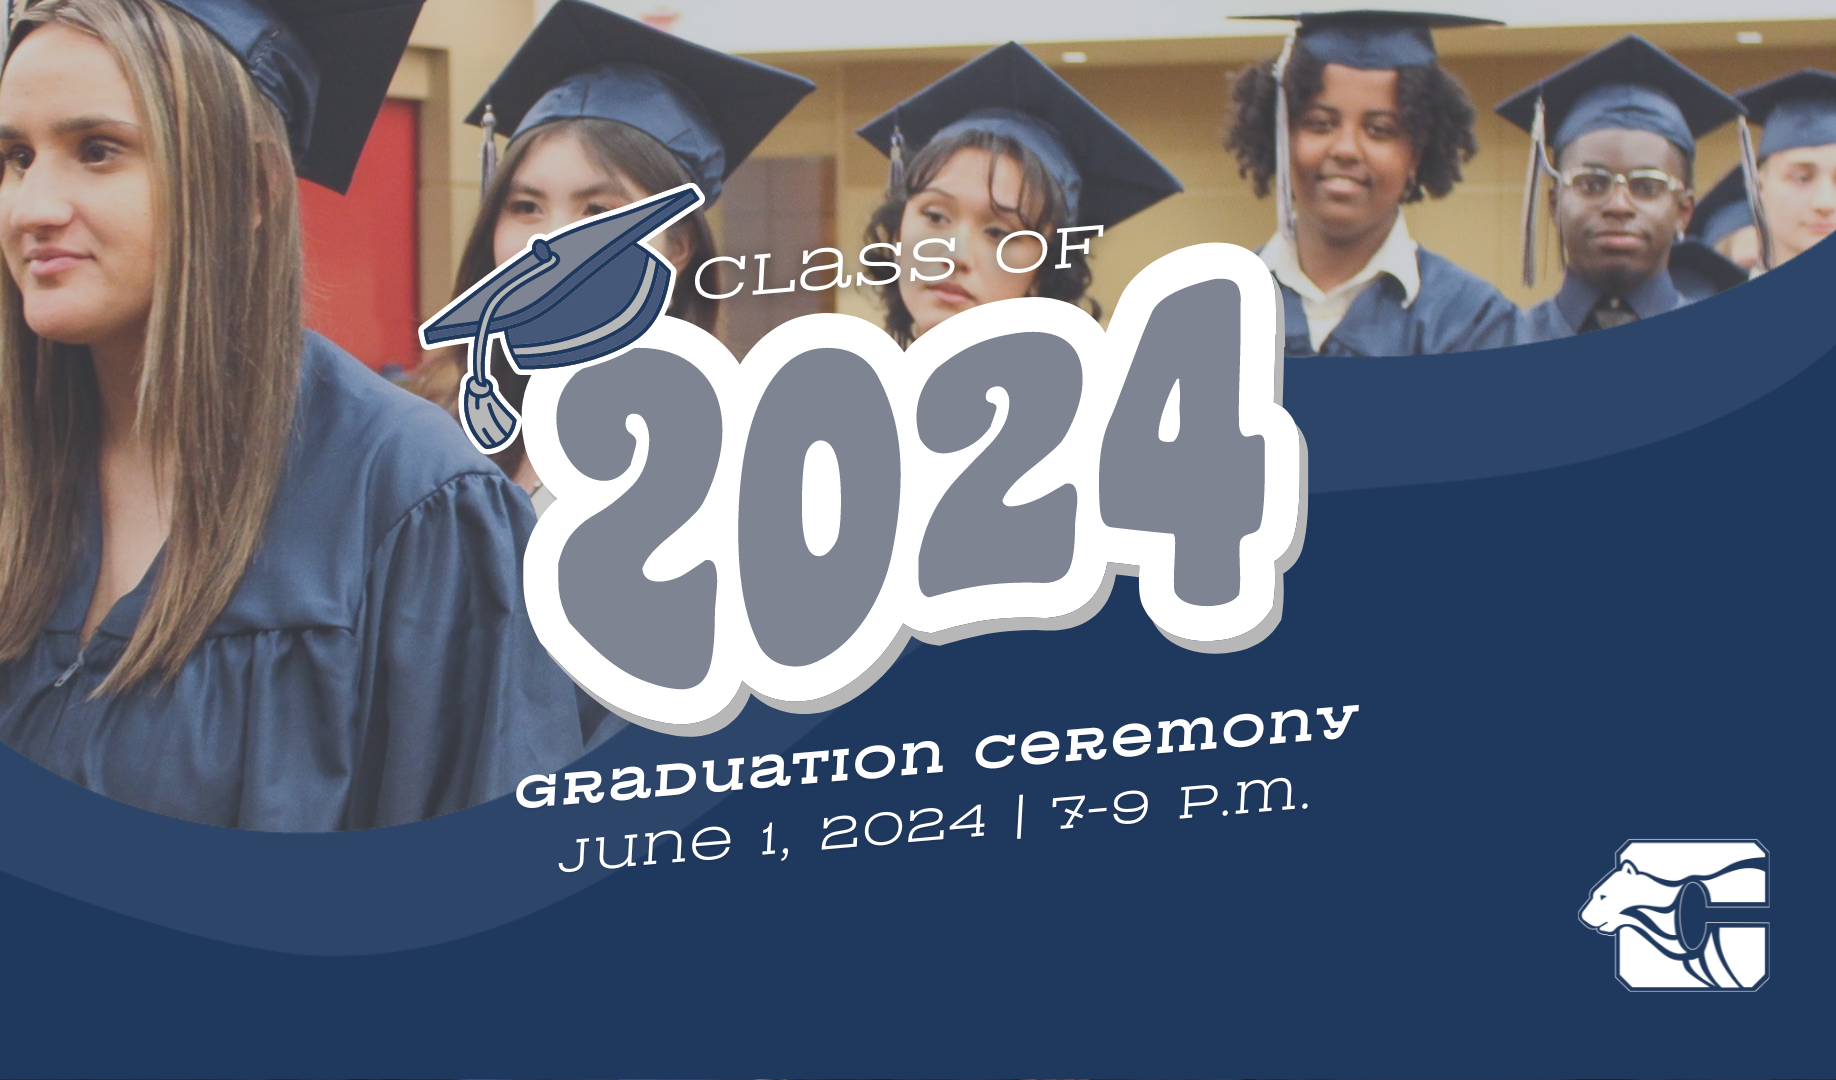 Century Graduation Class of 2024